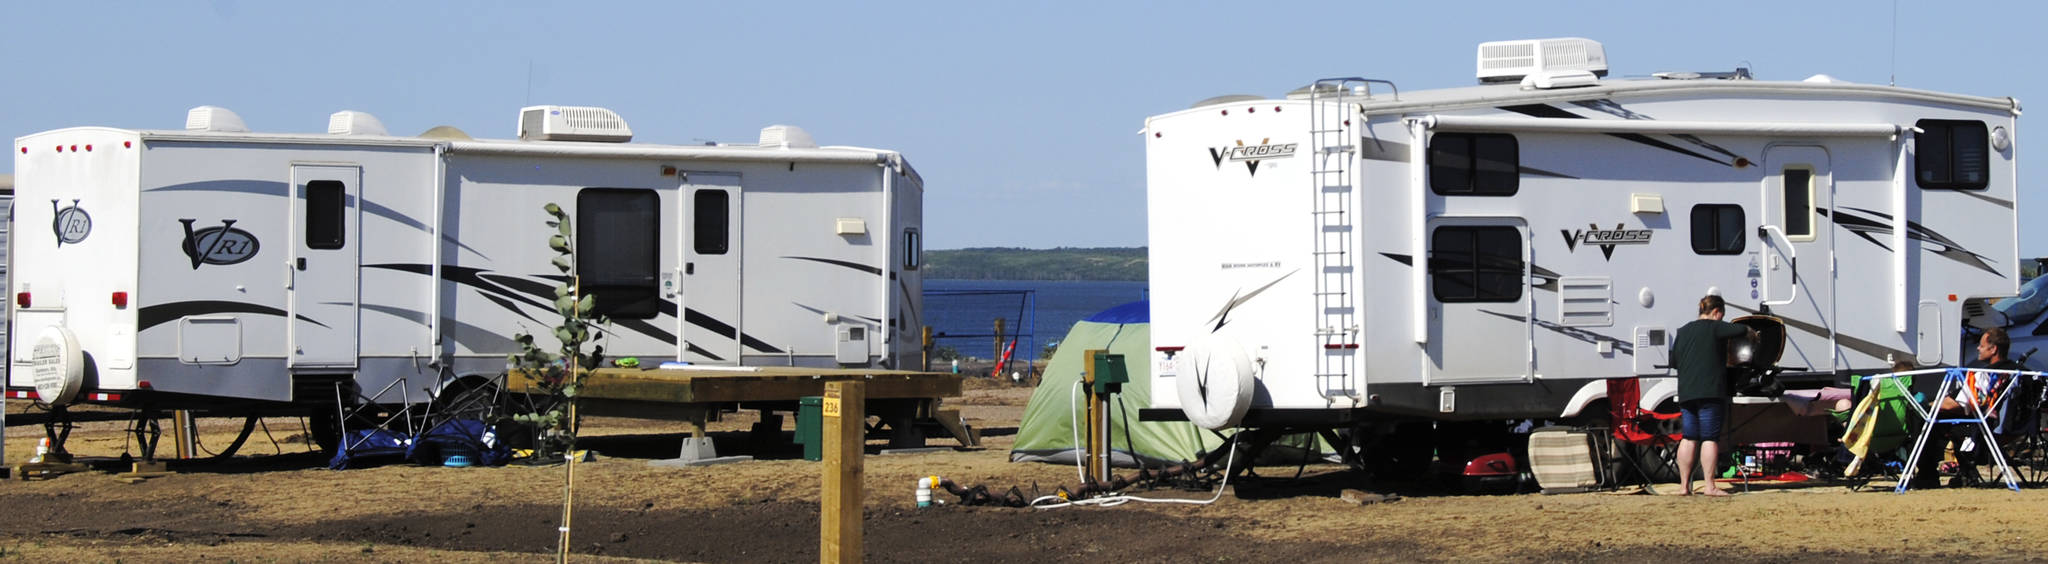 Campers at the Paradise Shores site July 5. (Lisa Joy/Black Press)